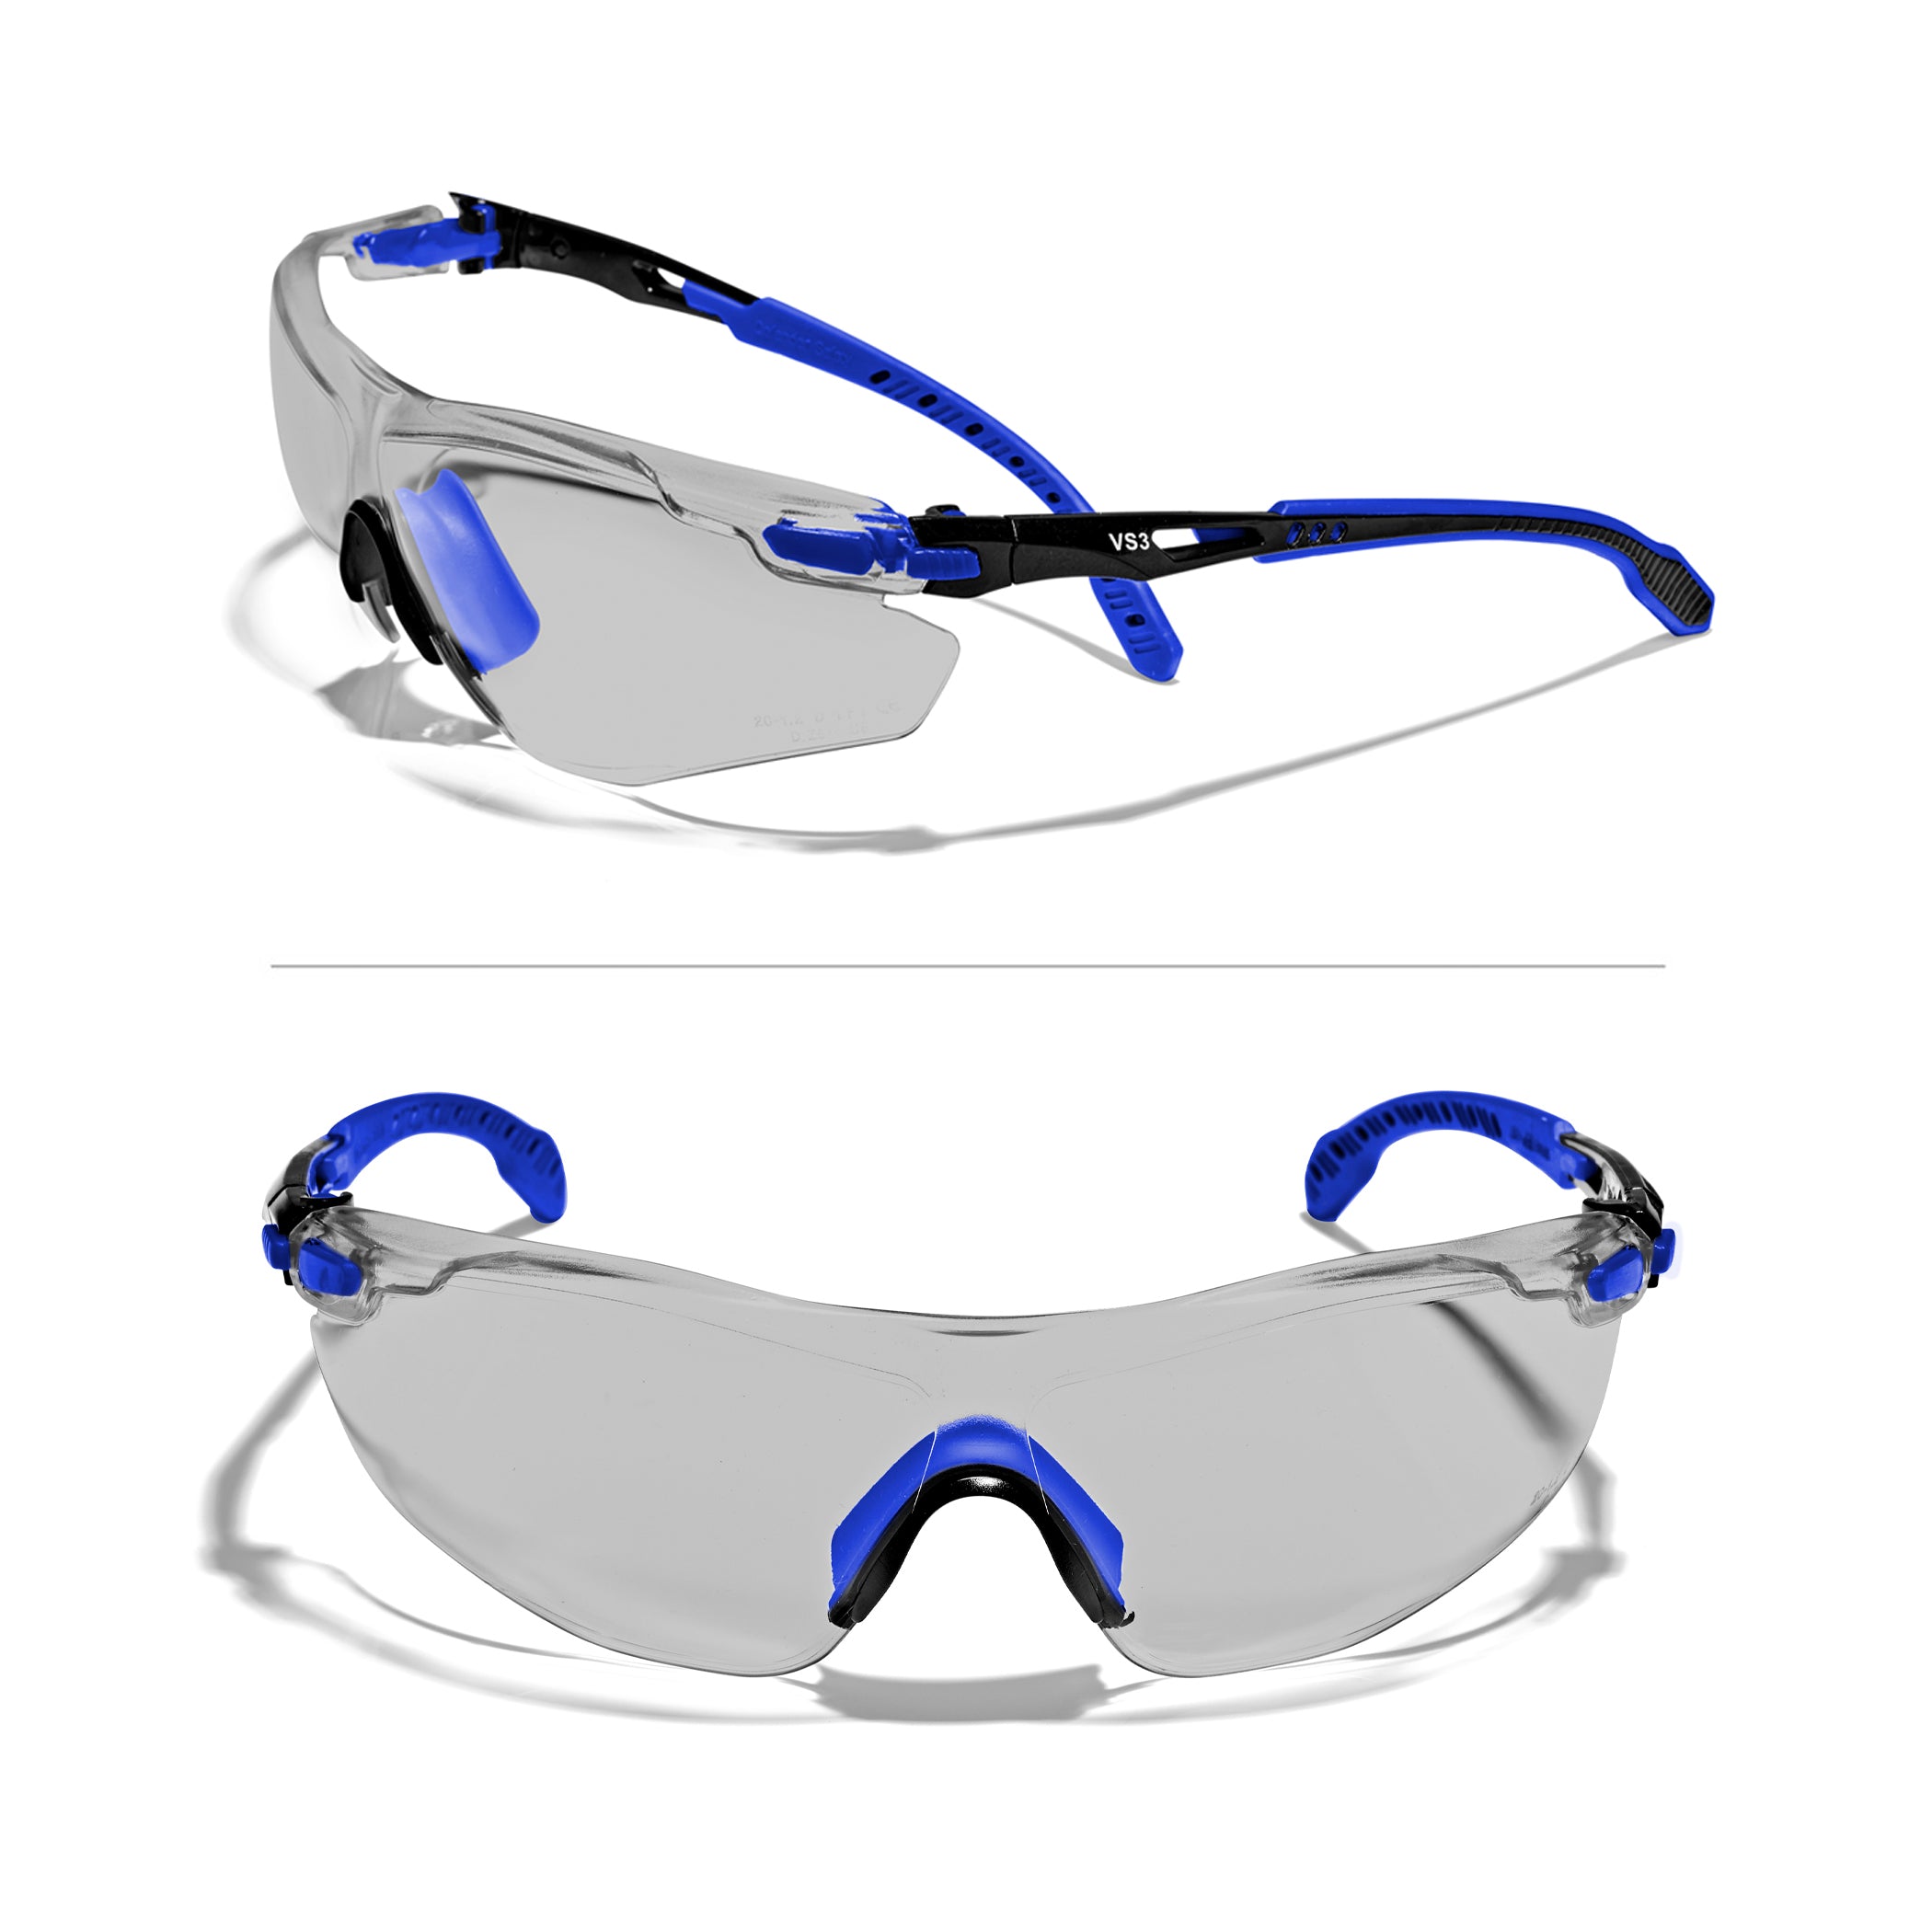 OPTIFENSE VS3 Anti Fog, Premium Smoked Safety Glasses, ANSI Z87+ (Color: Blue)